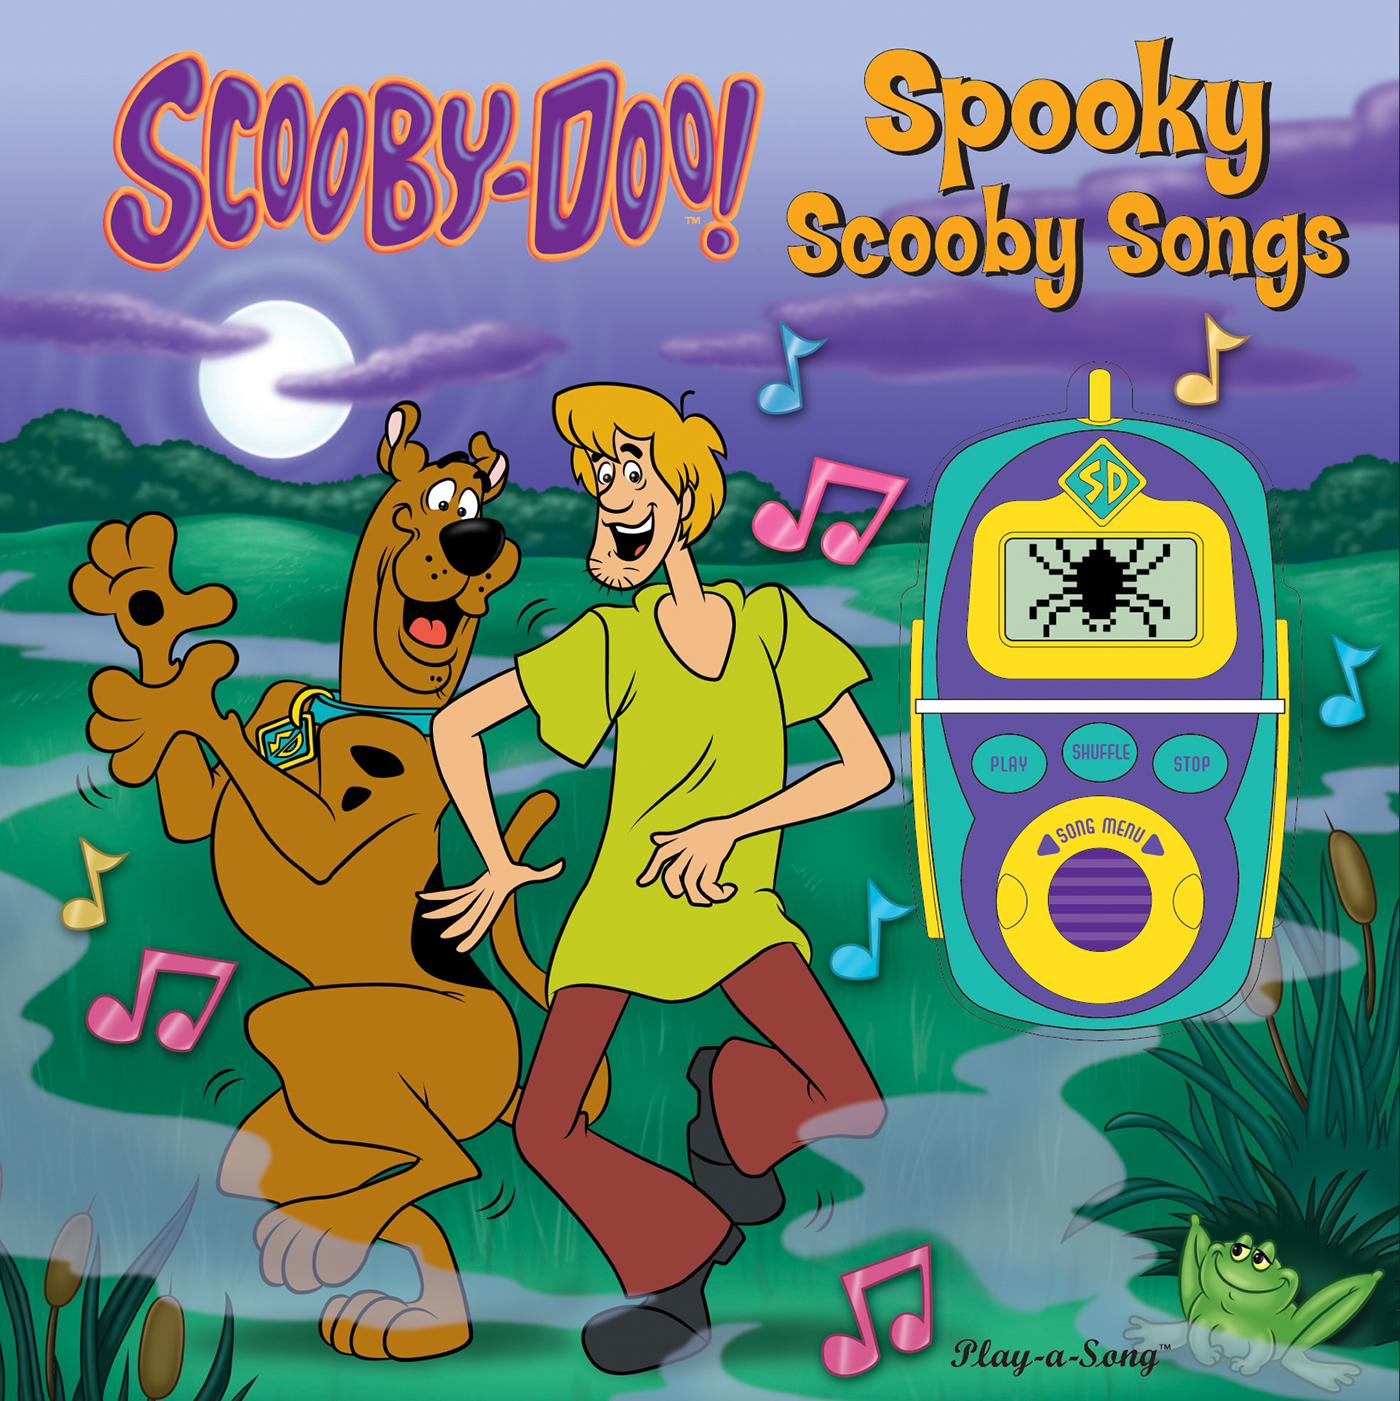 Scooby-Doo Digital Music Player book on Behance